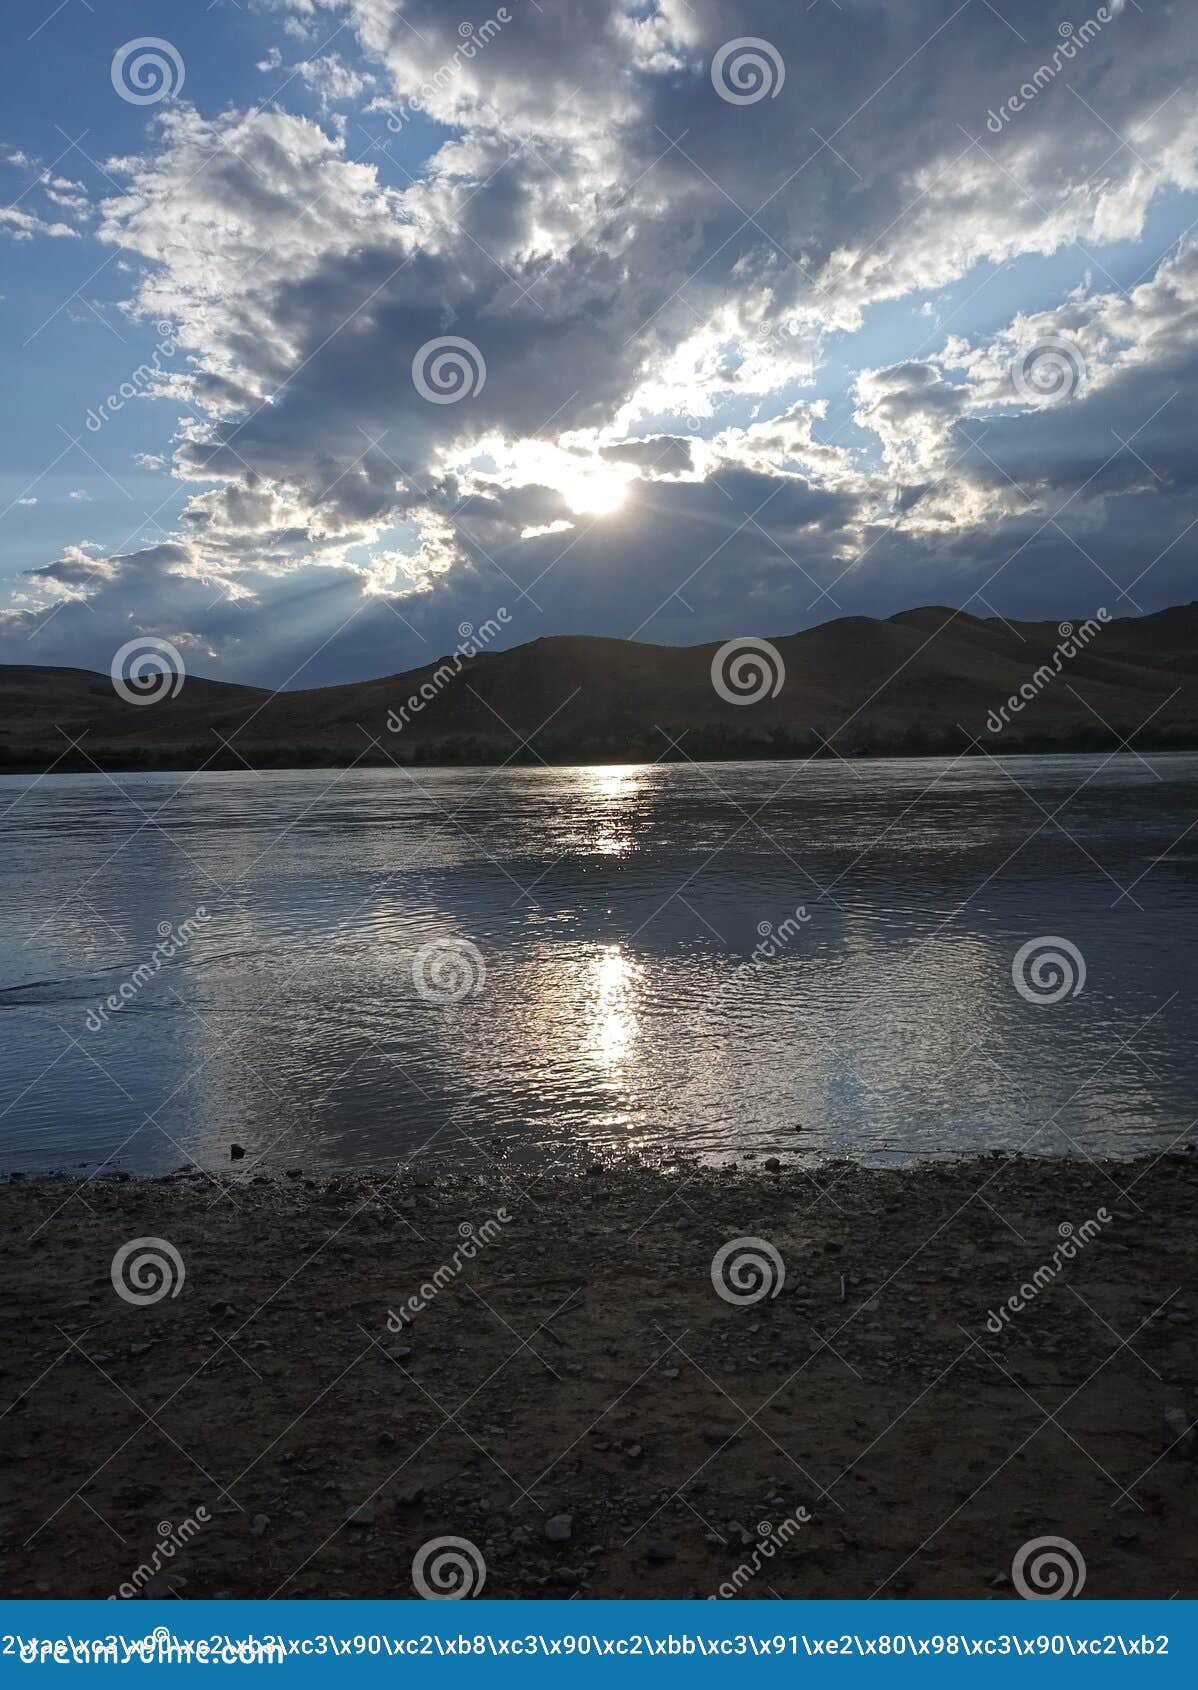 sunset on the ili river, kazakhstan